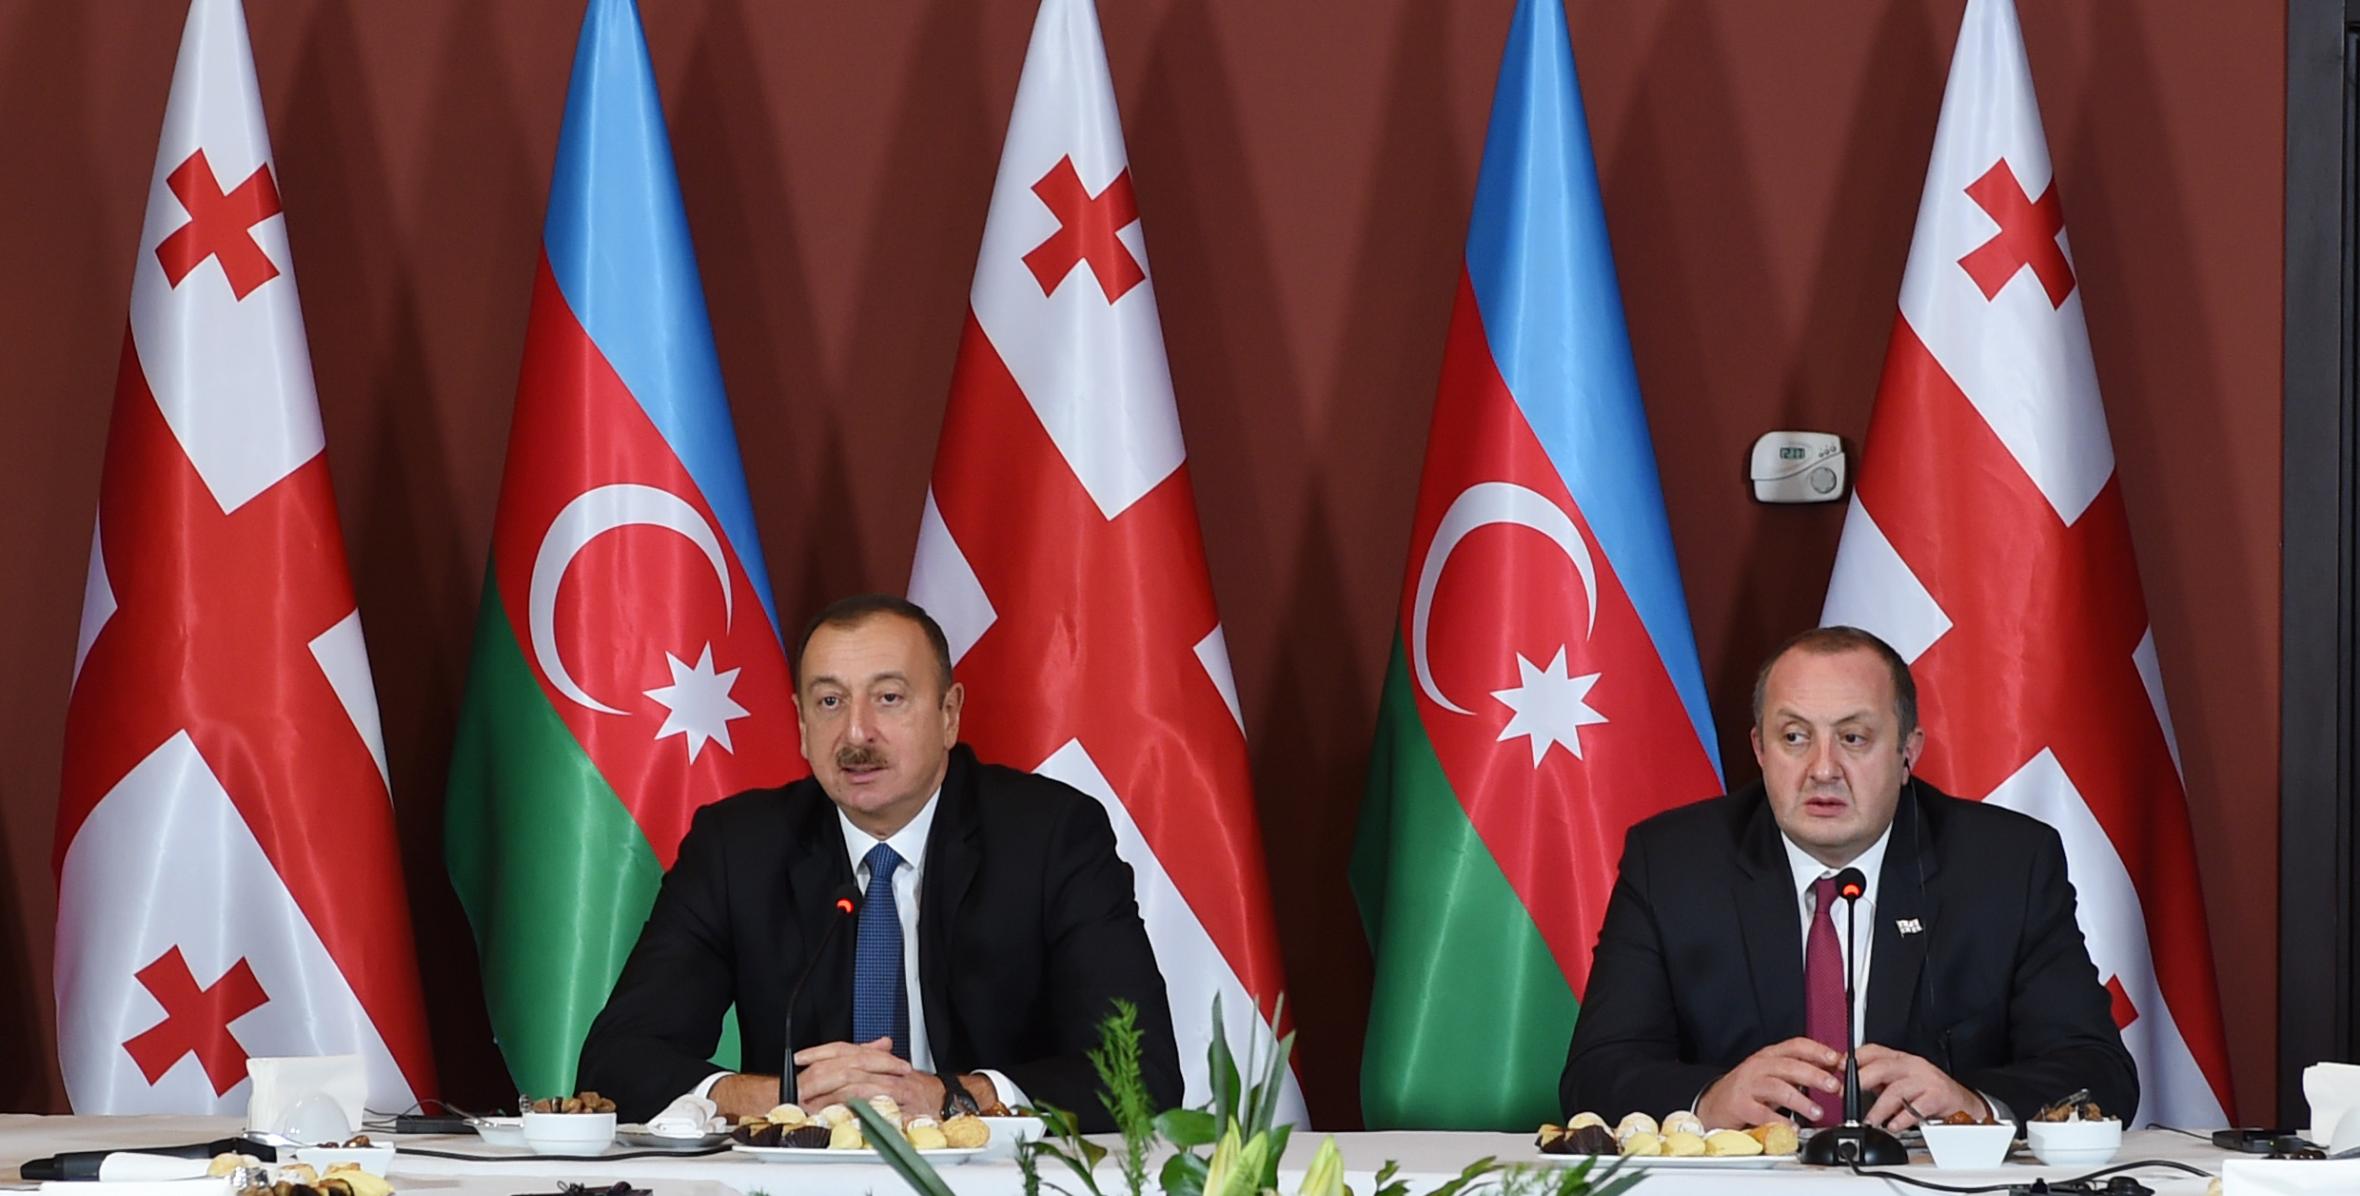 The Azerbaijani and Georgian presidents visited the “Tea house” training center in Marneuli